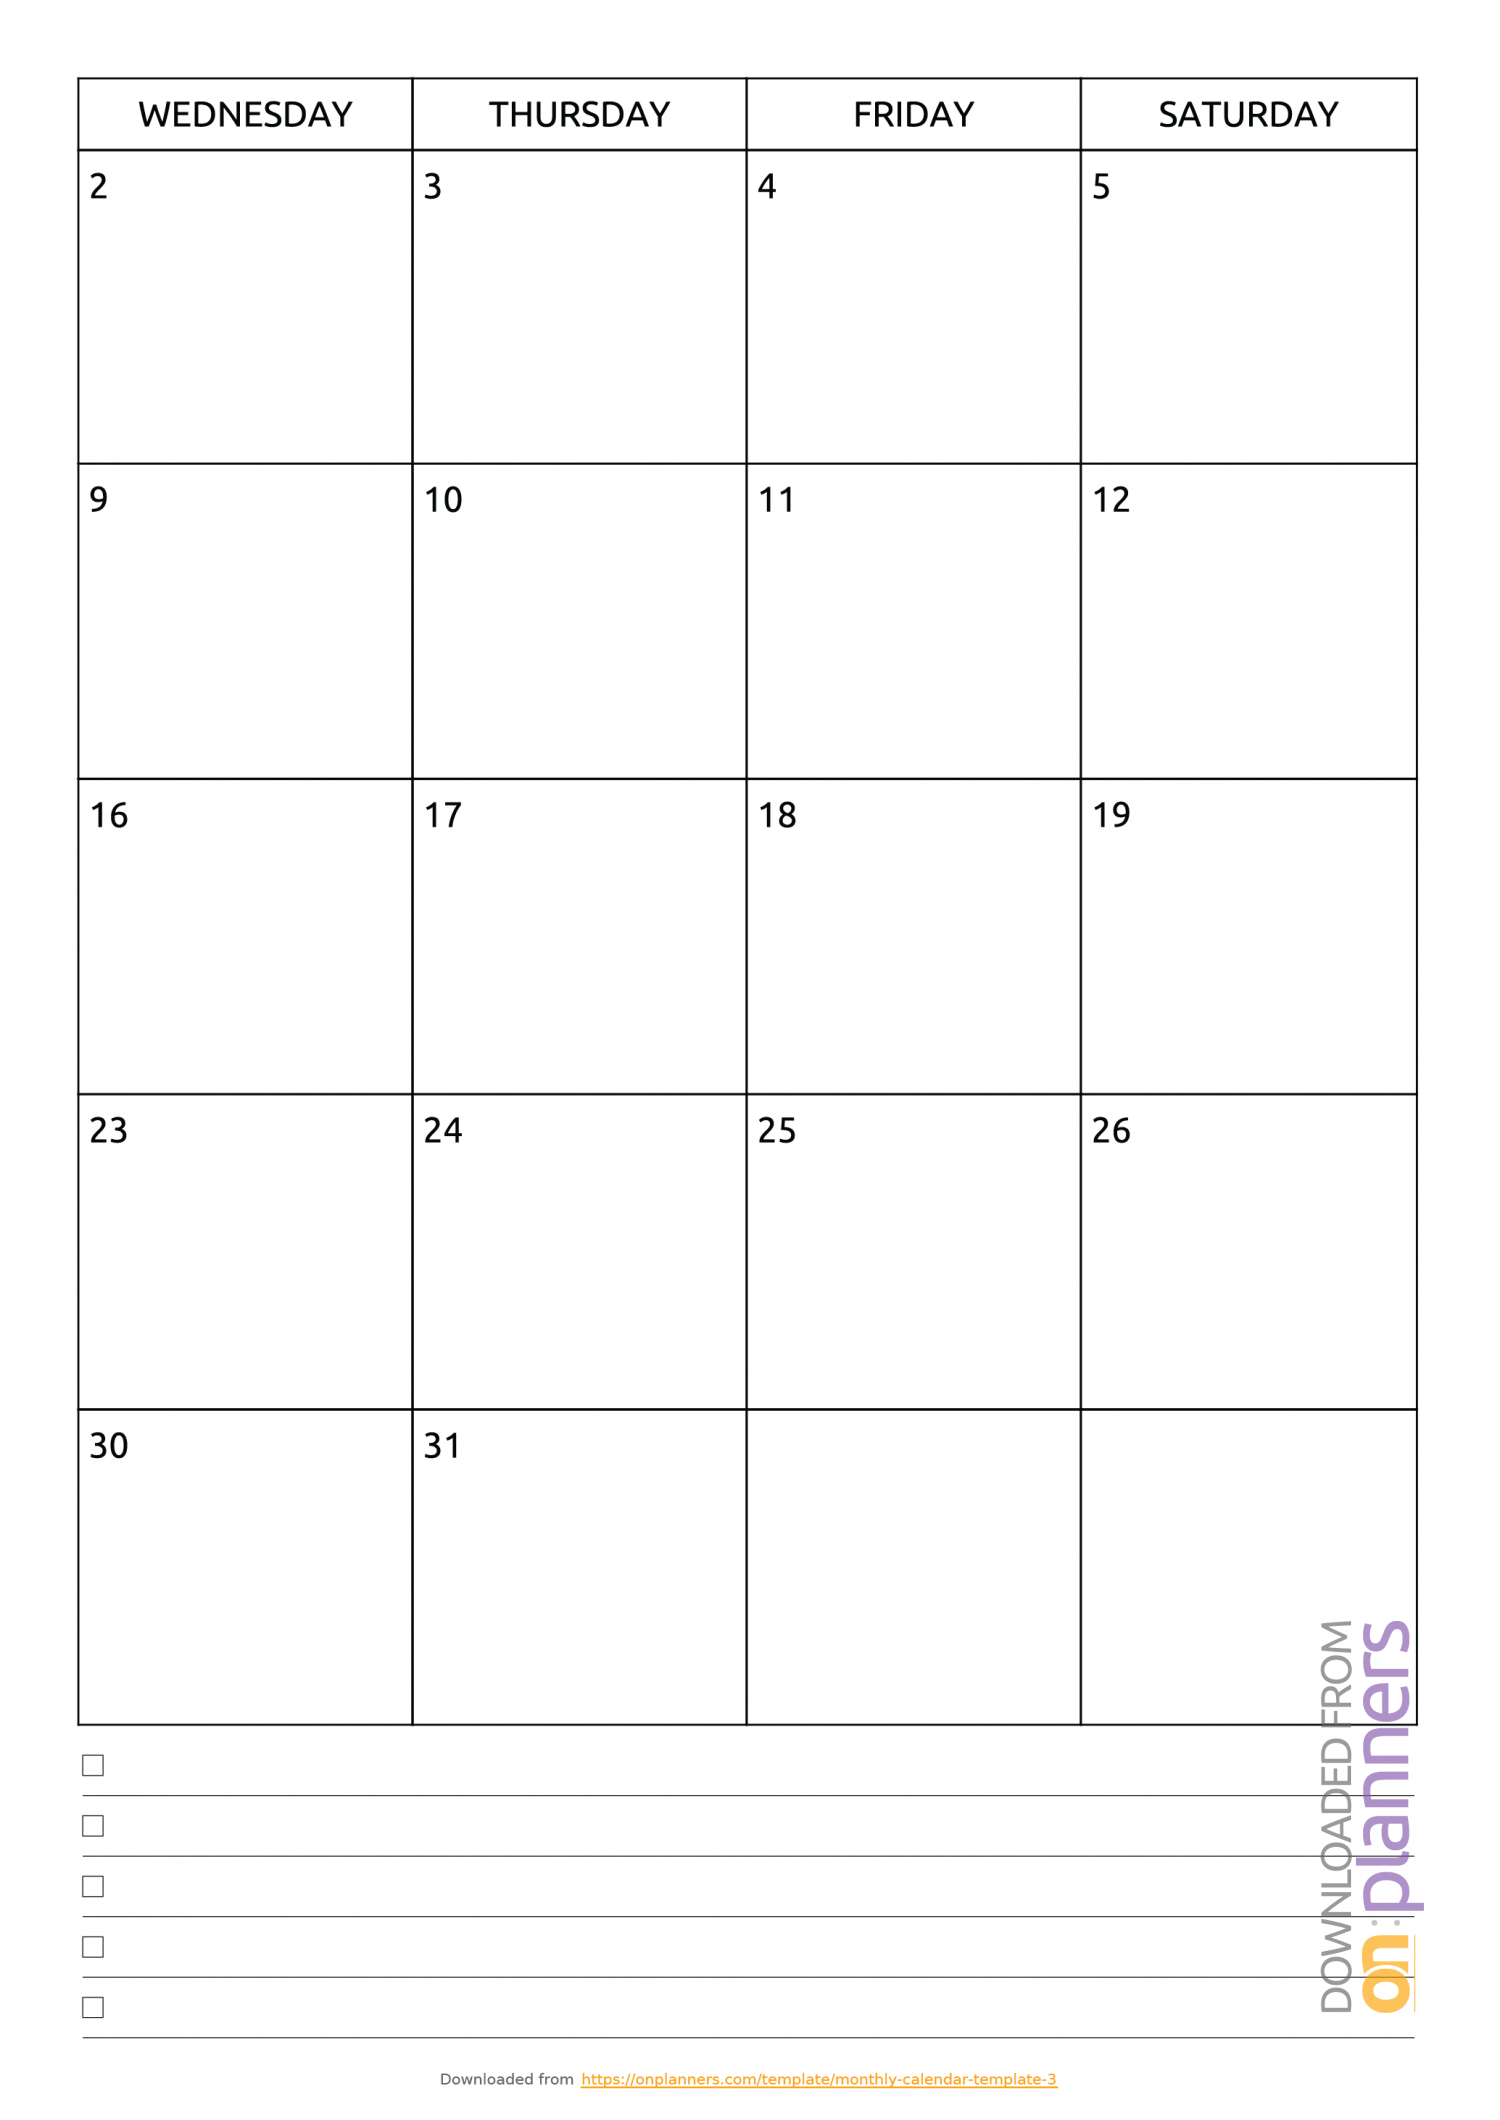 8X 10 Monthly Calaendar Printable | Example Calendar Printable  Blank Monthly Calendar Printable Free Without Downloading